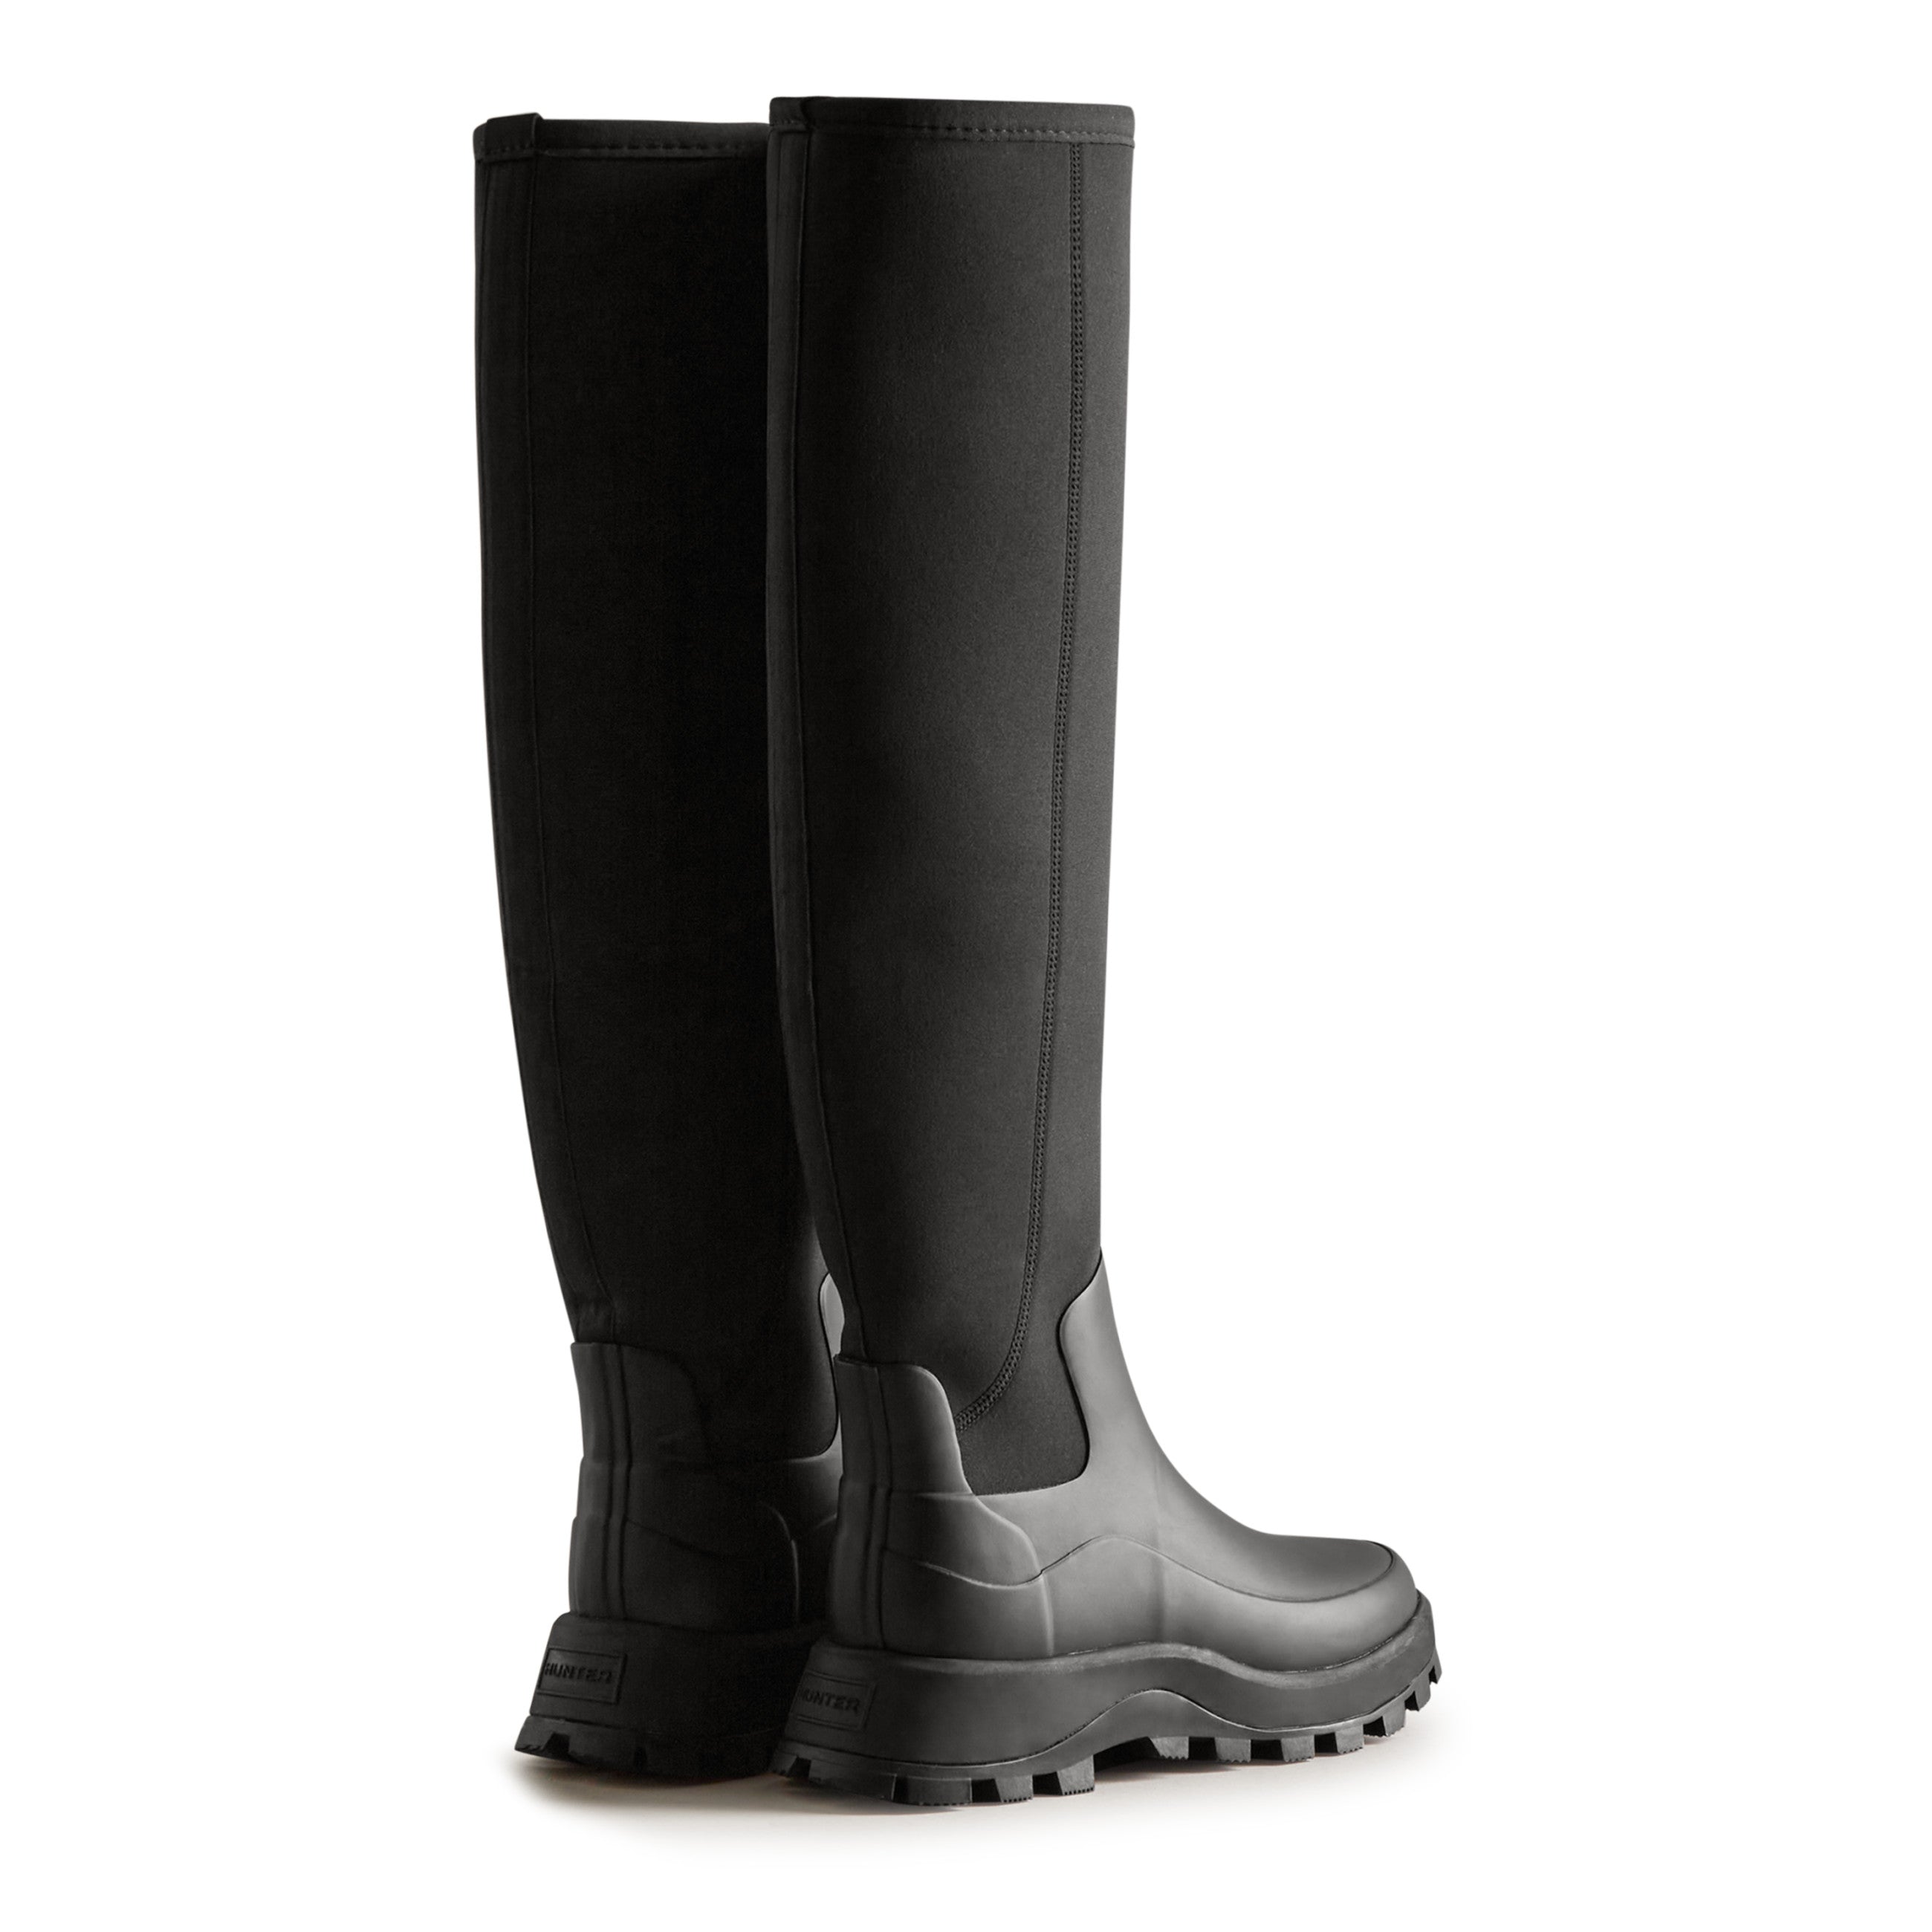 Women's City Explorer Neoprene Tall Rain Boots